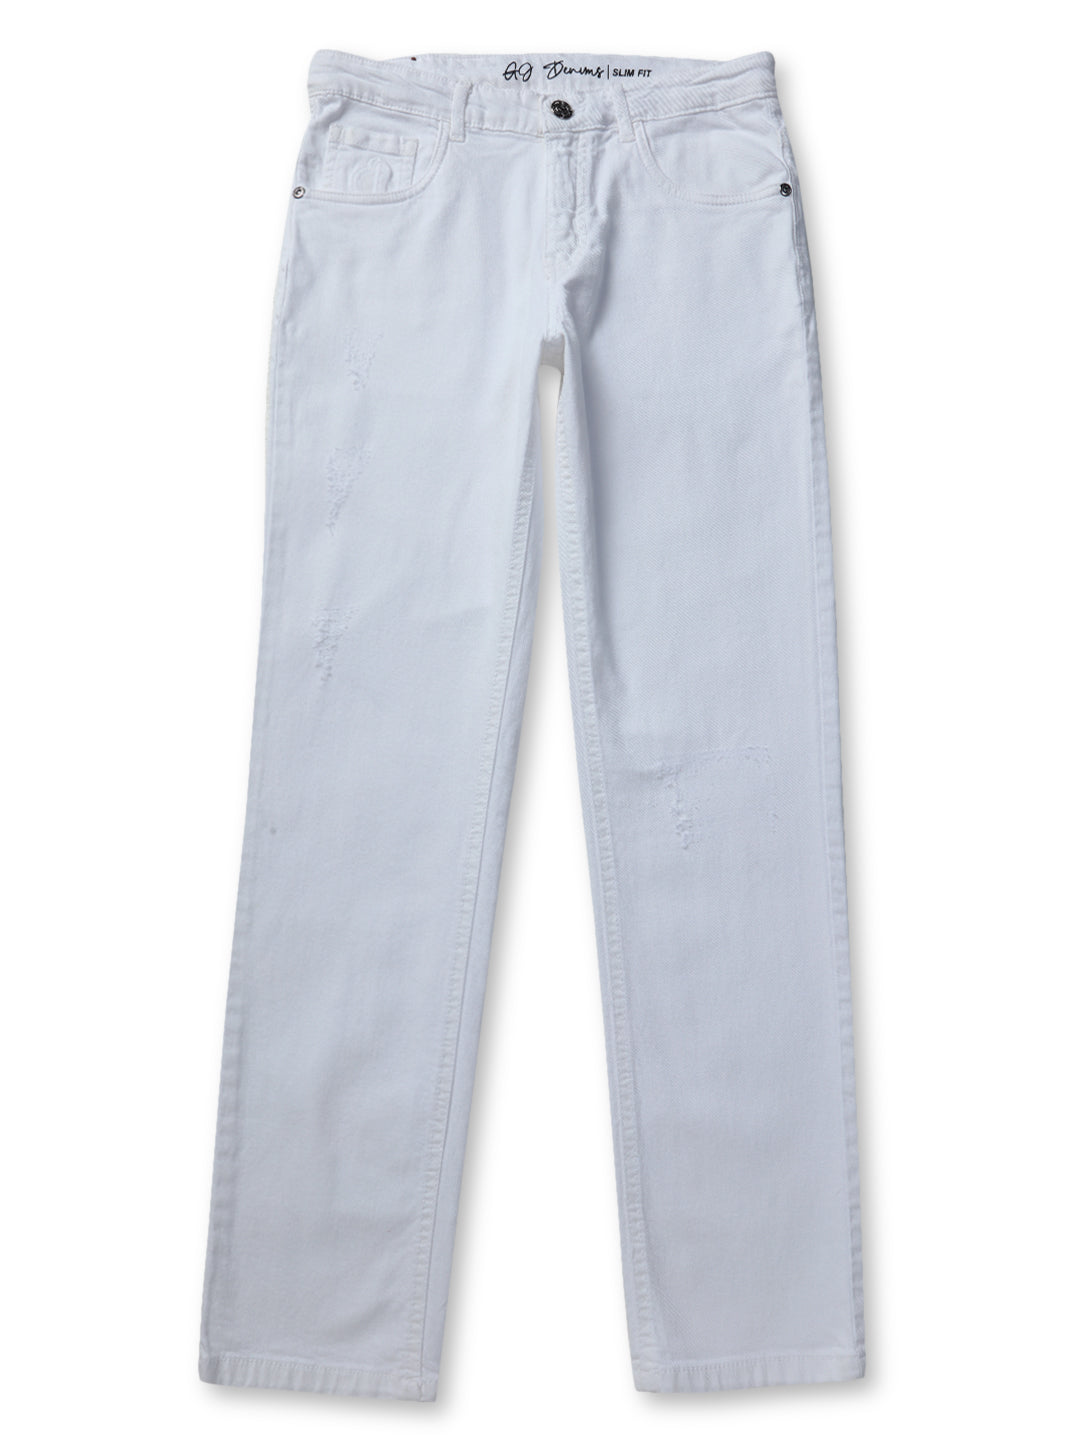 Boys White Solid Denim Jeans